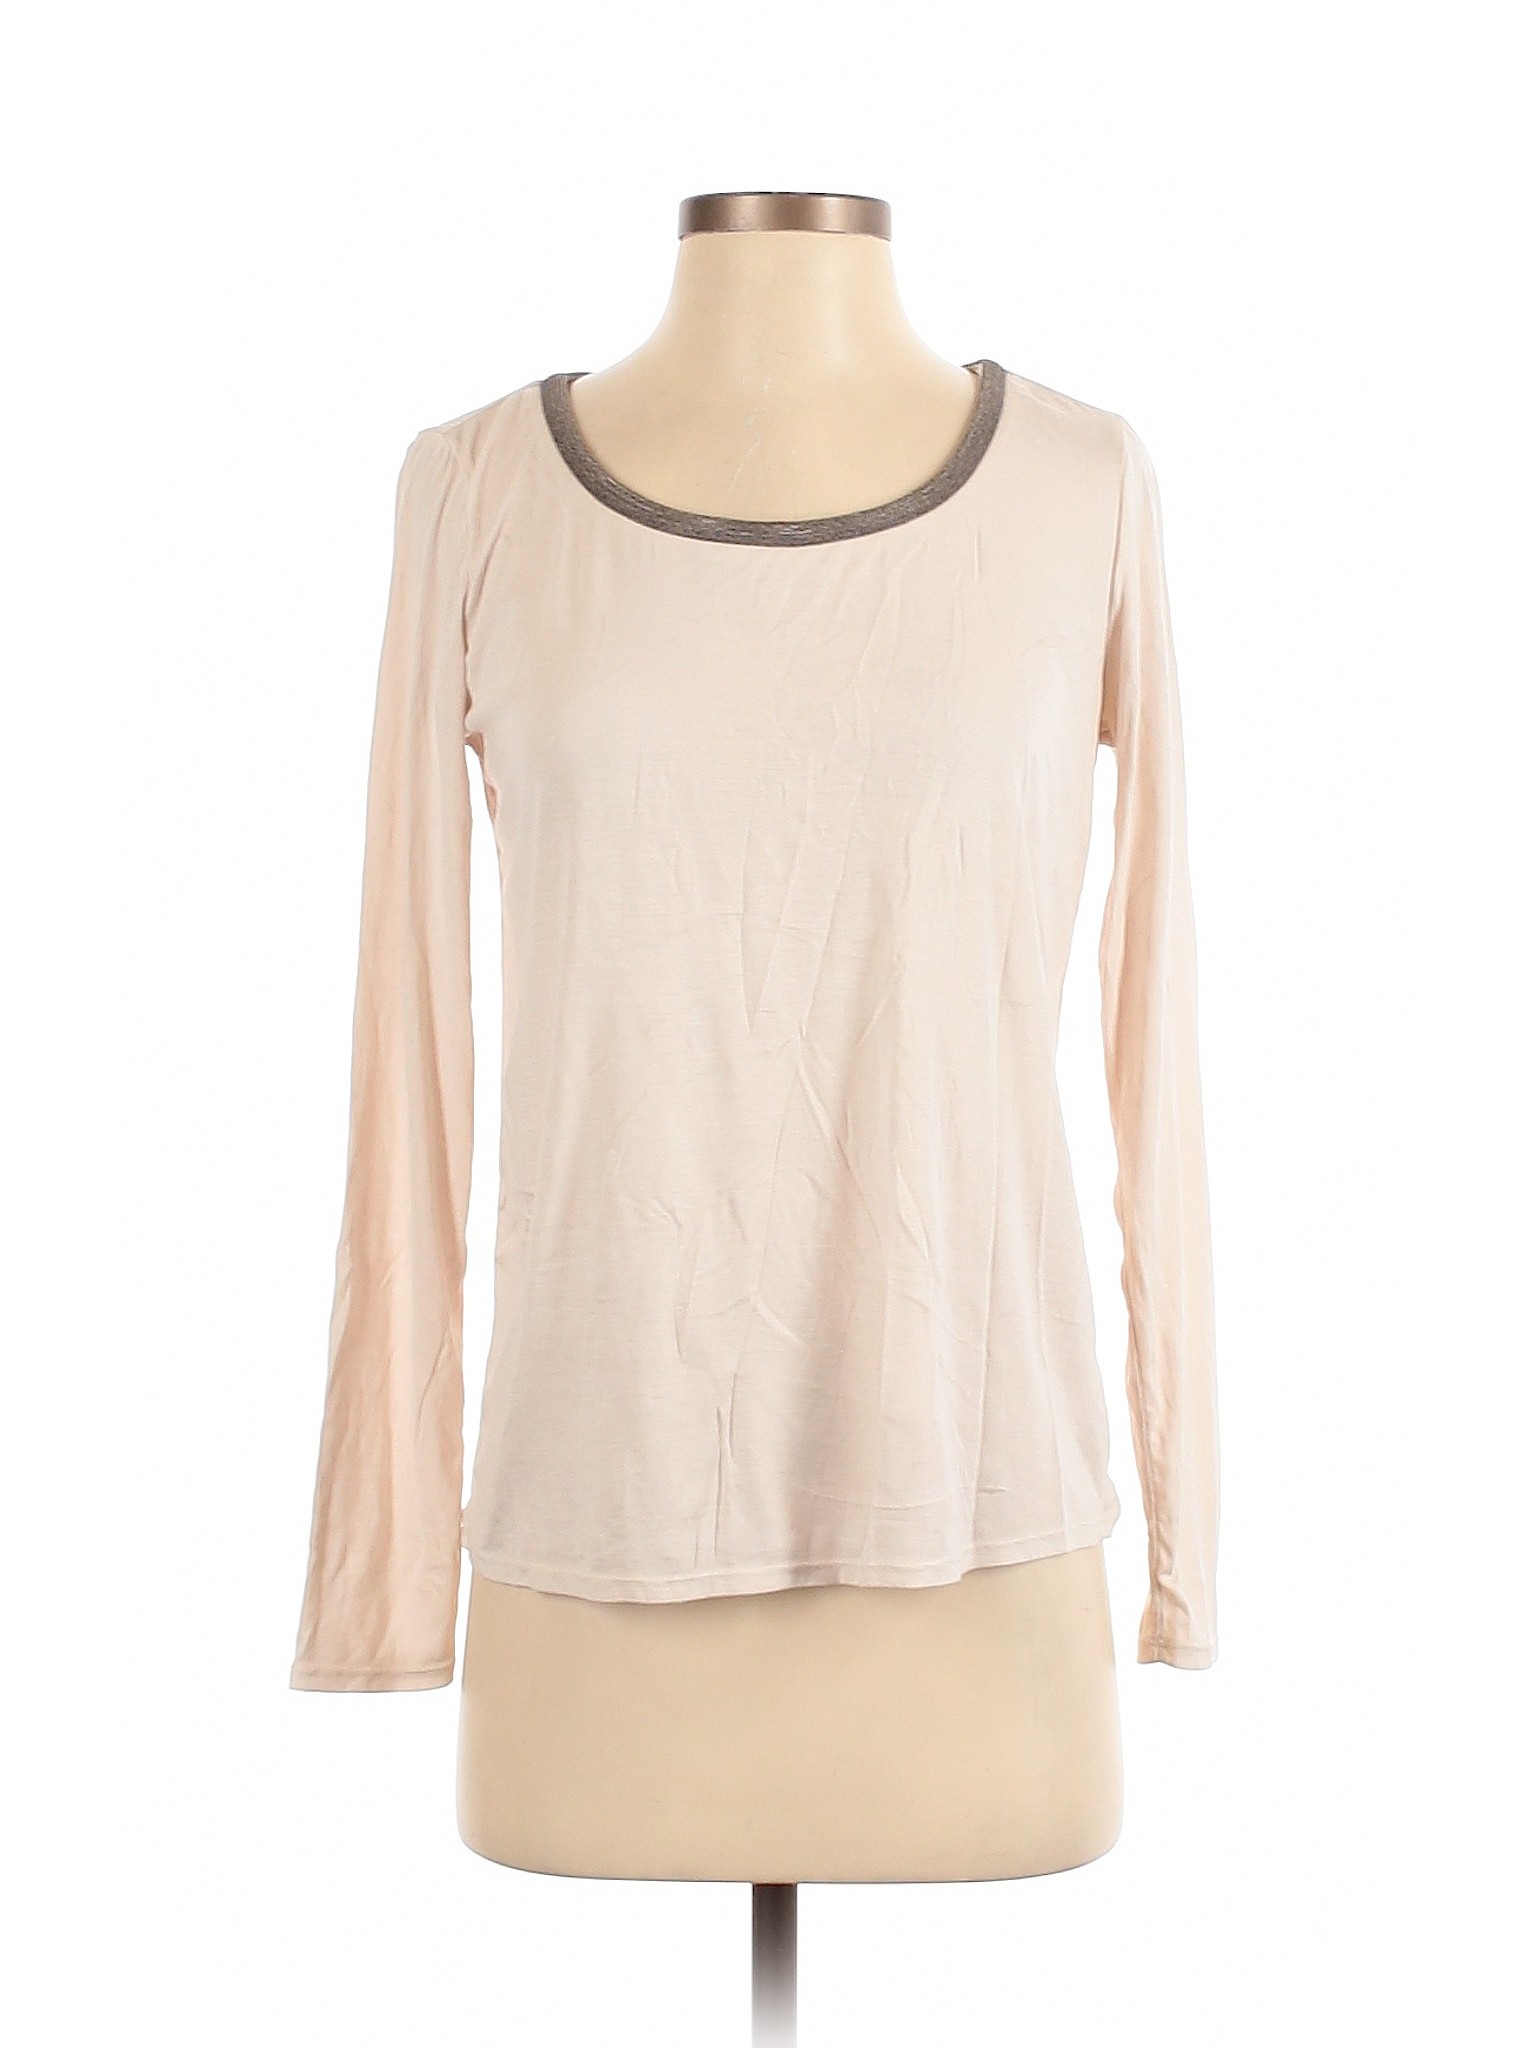 Sigrid Olsen Women Pink Long Sleeve T-Shirt S | eBay